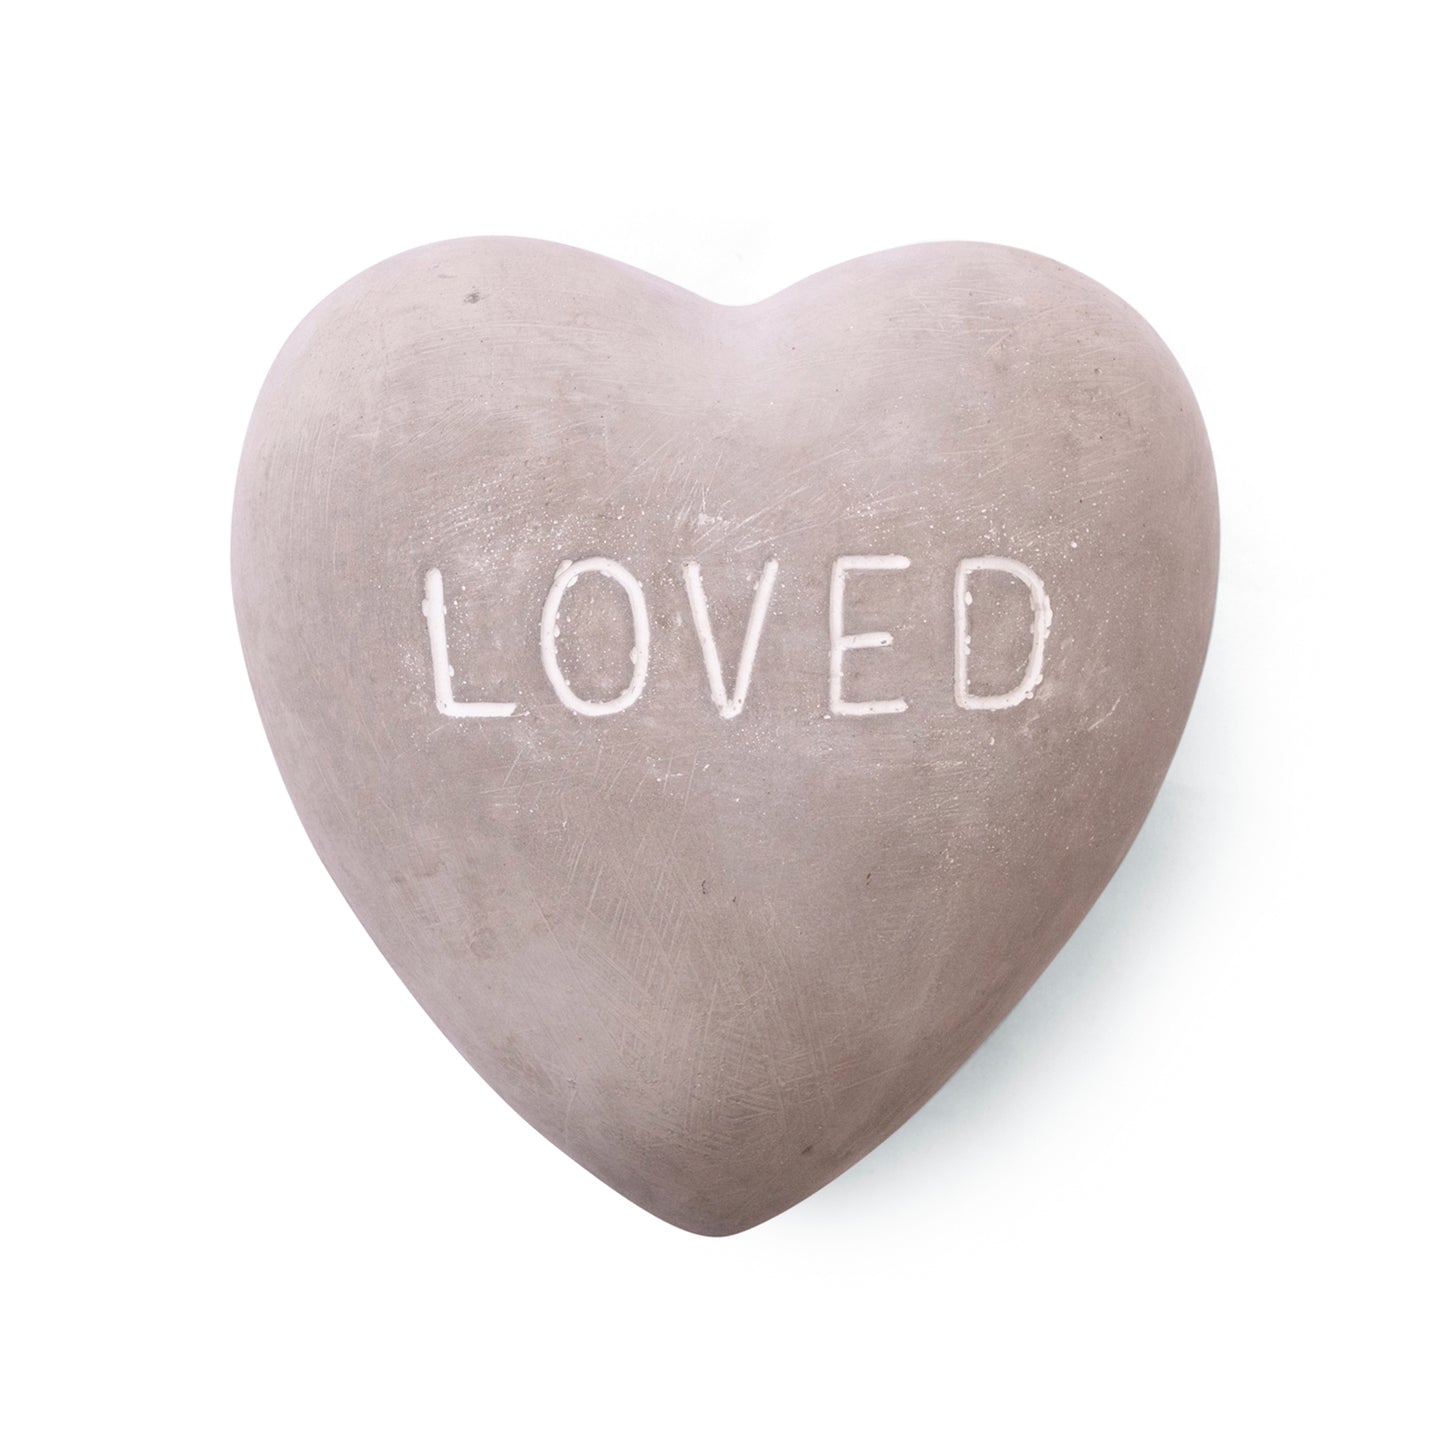 Loved Stone Heart